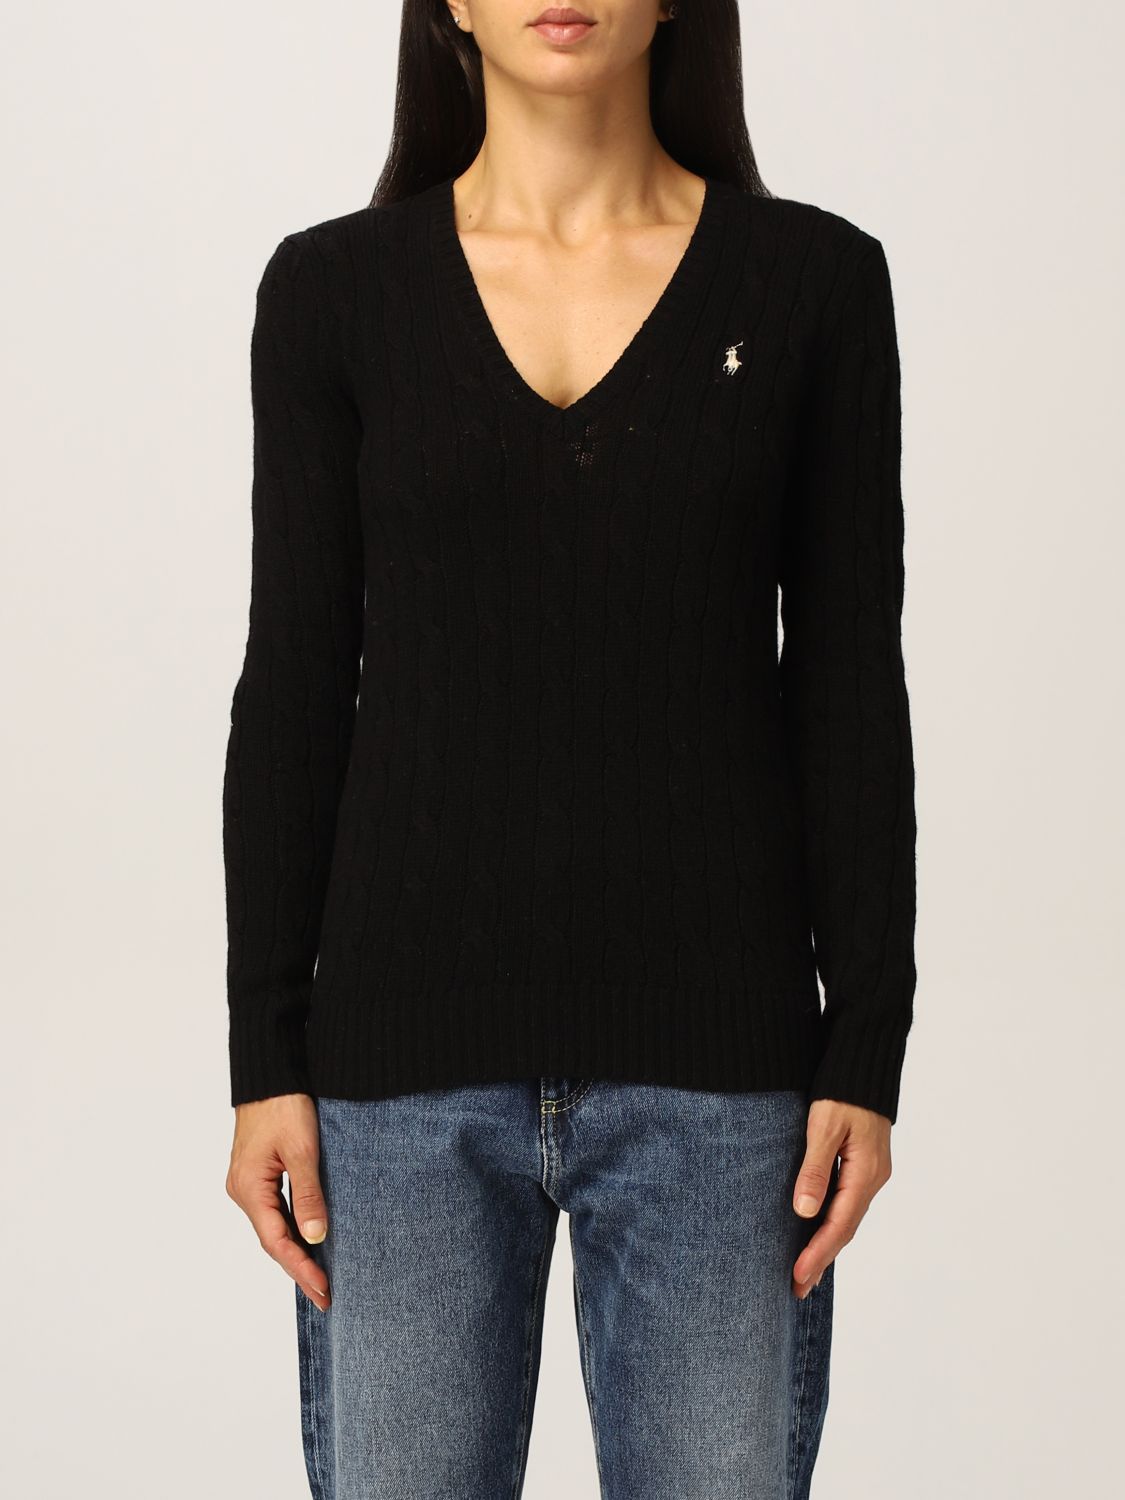 Lauren Ralph Lauren Sweaters | Polo Ralph Lauren Black Cable-Knit V www ...